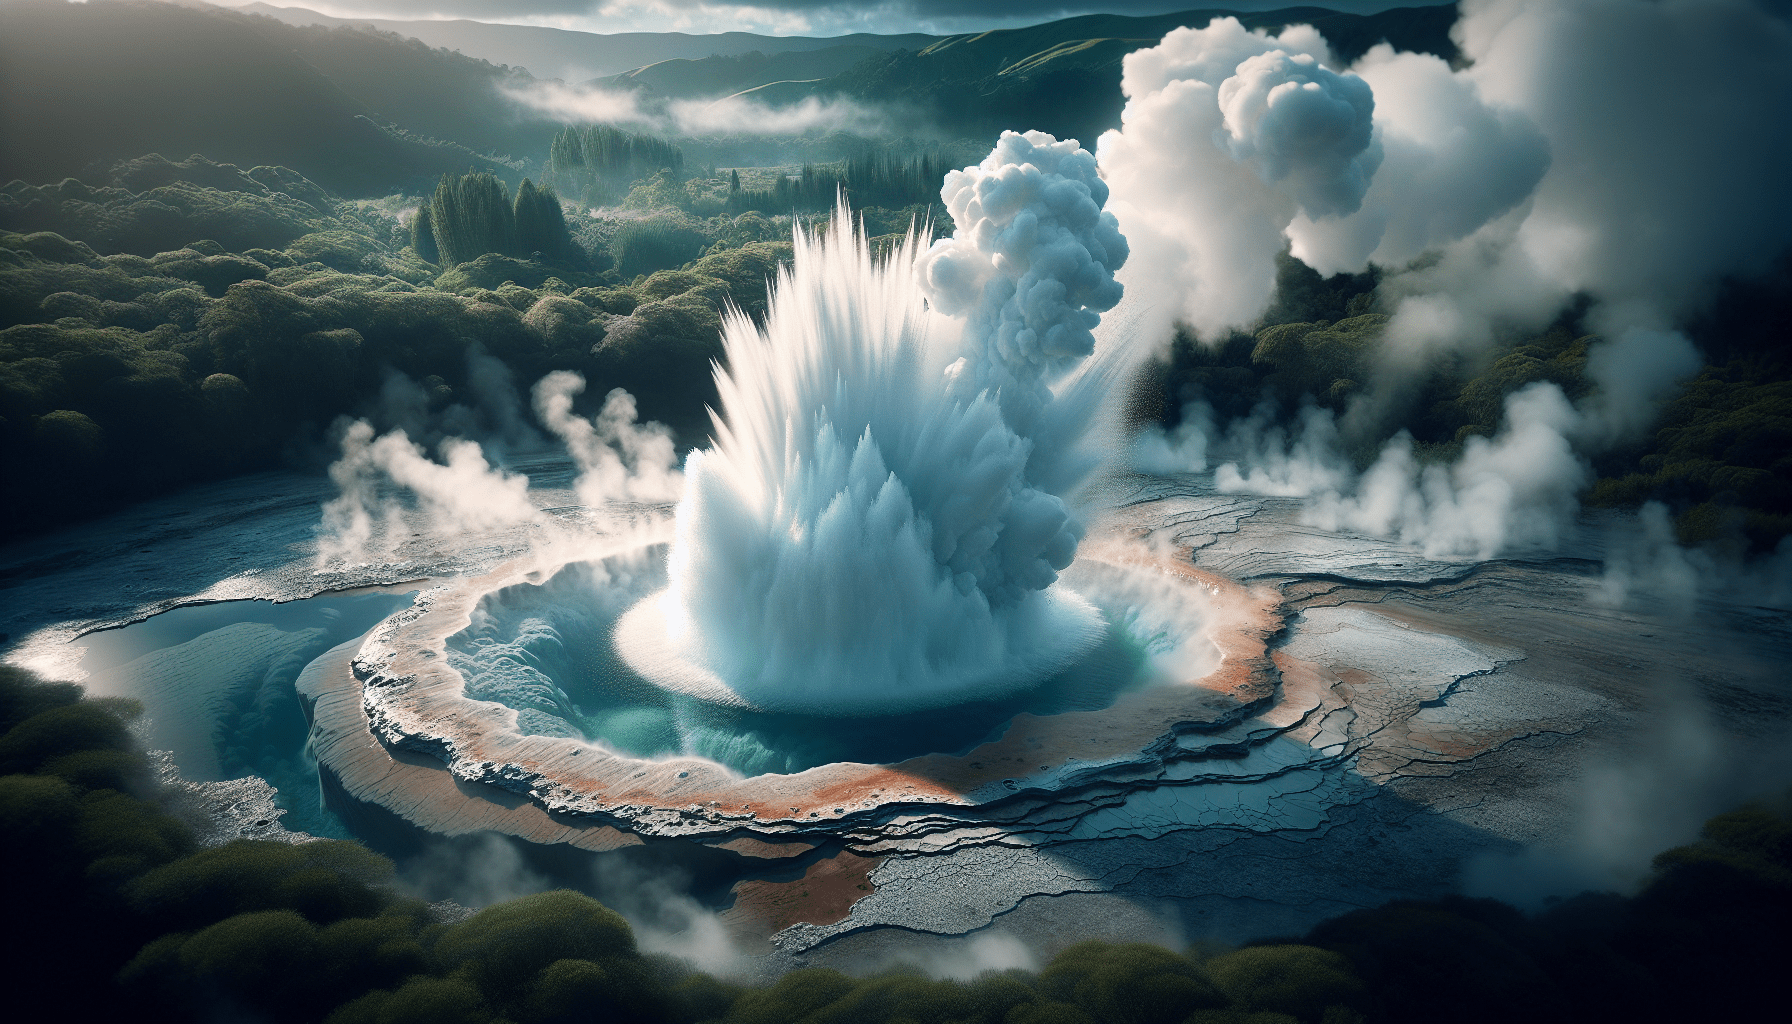 Rotorua, New Zealand: A Geothermal Wonderland